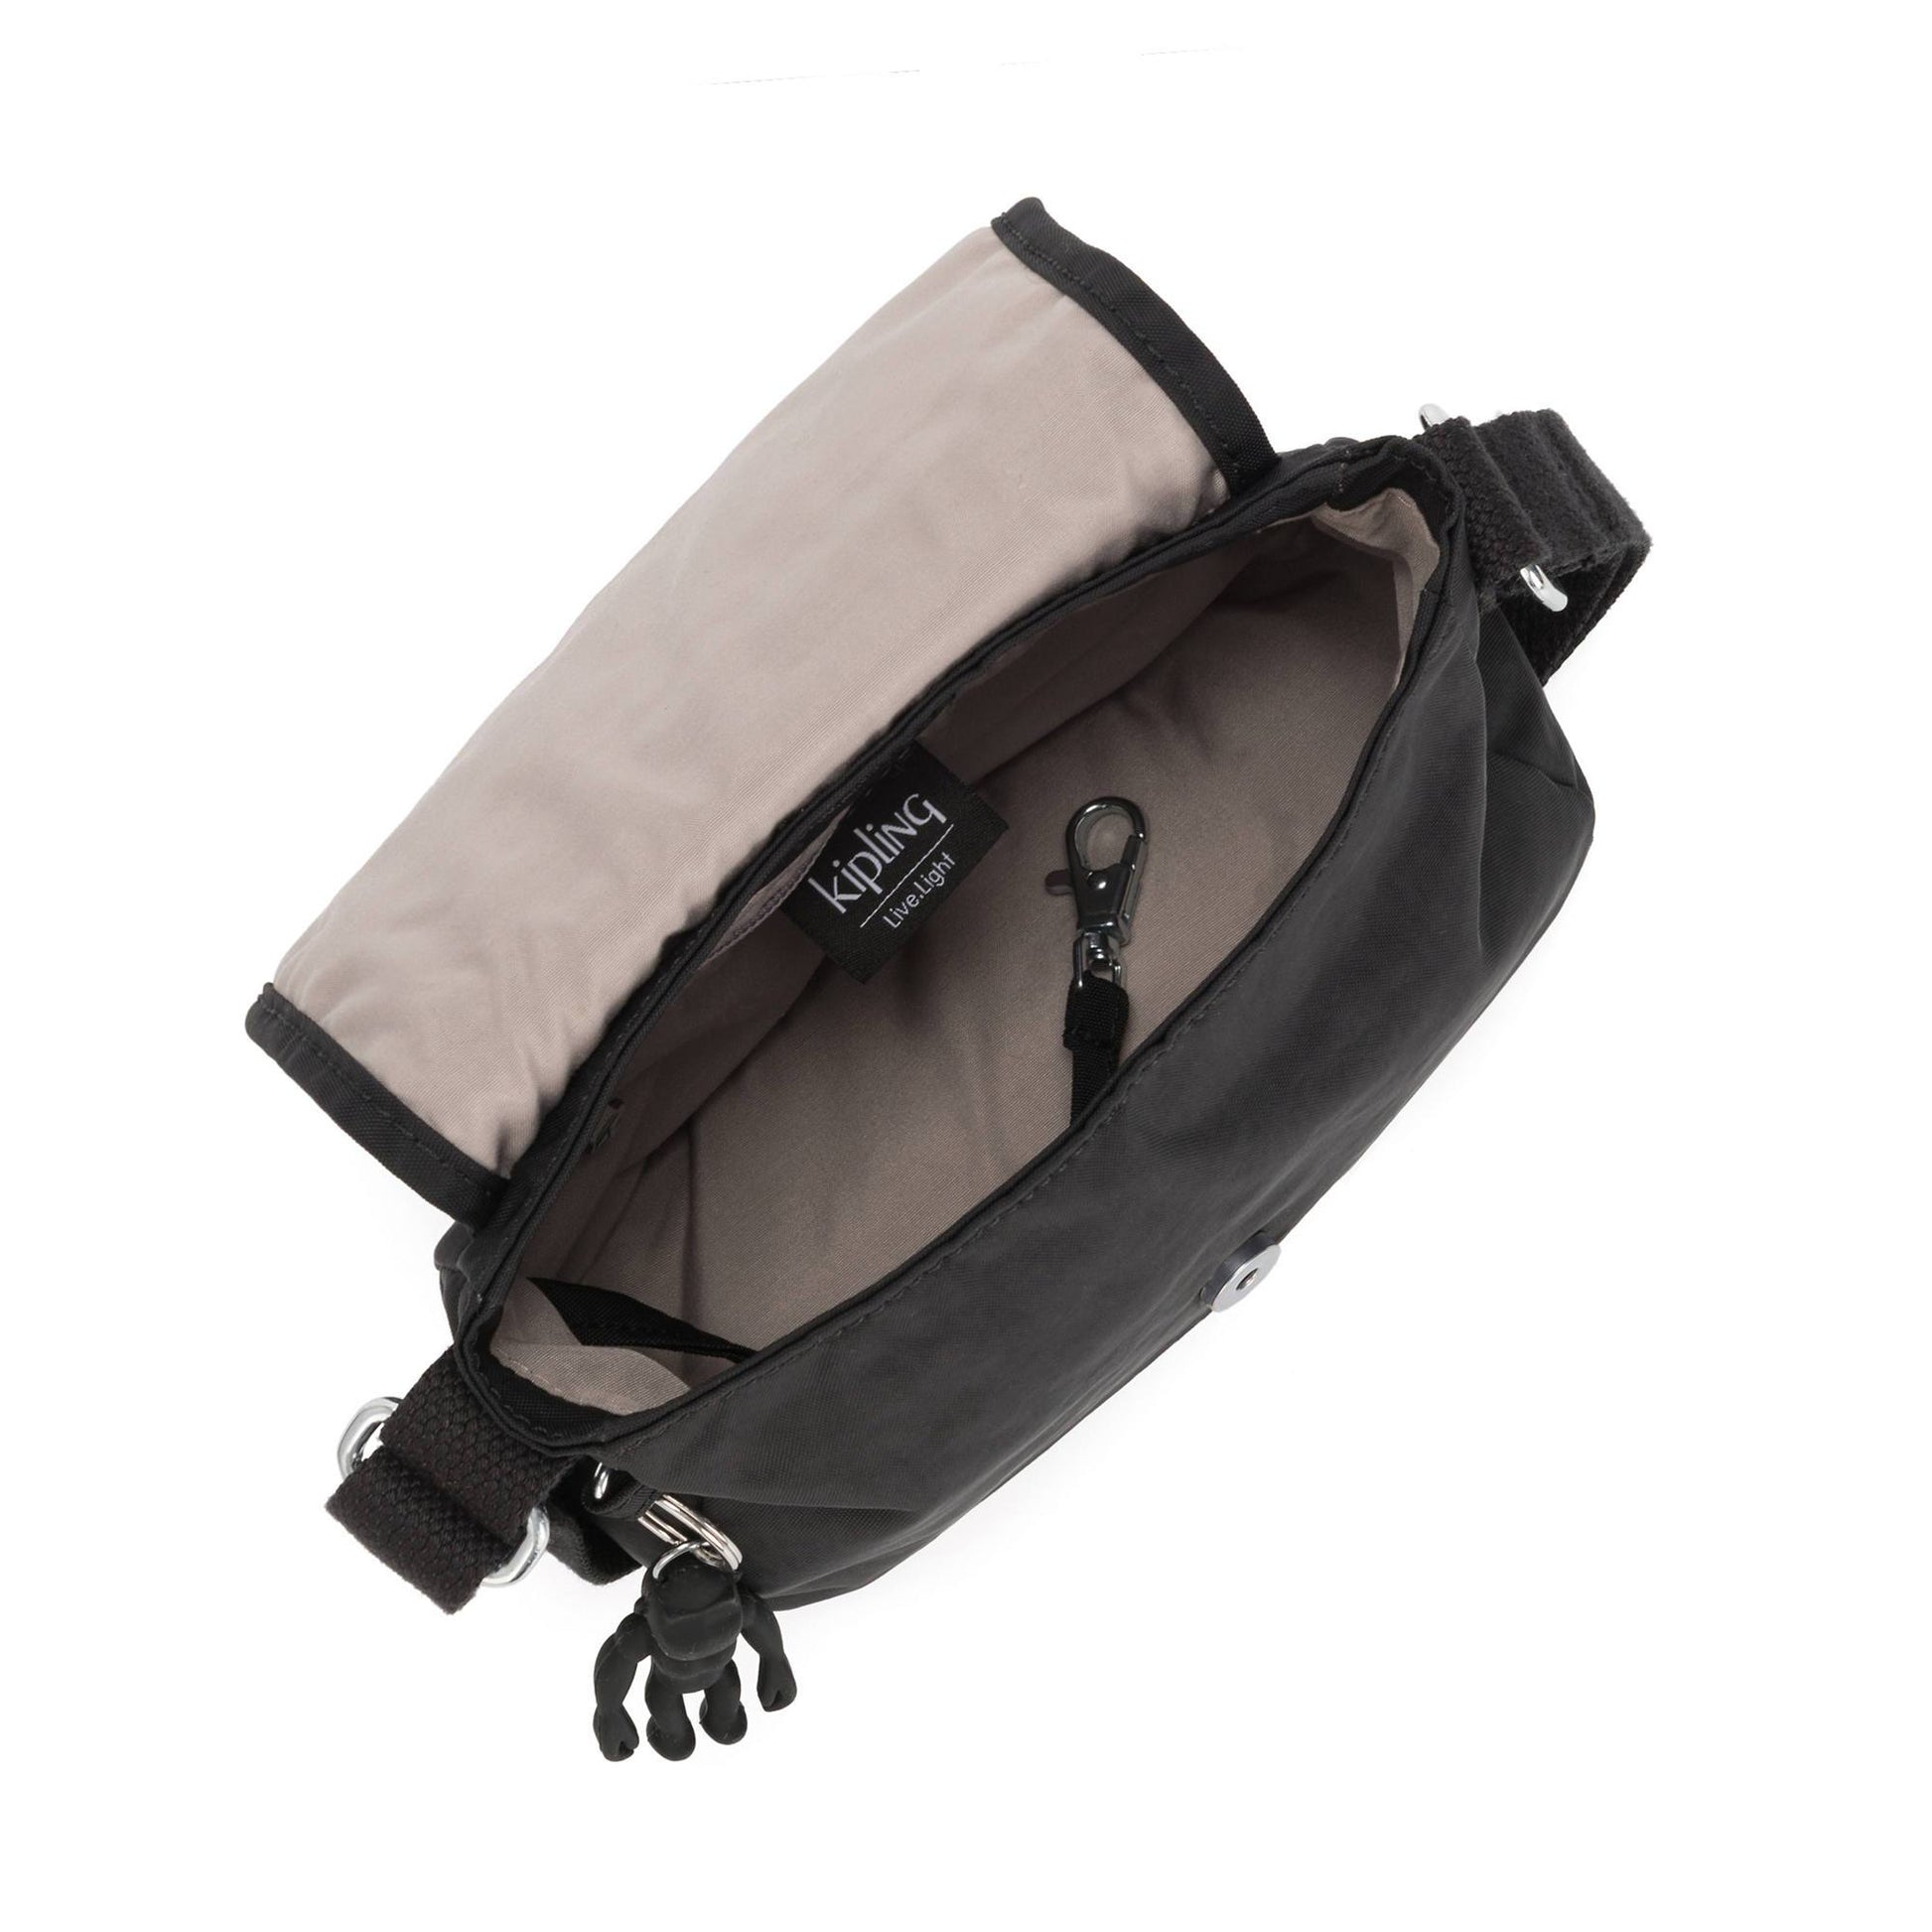 Kipling Sabian Crossbody Mini Bag - Black Noir